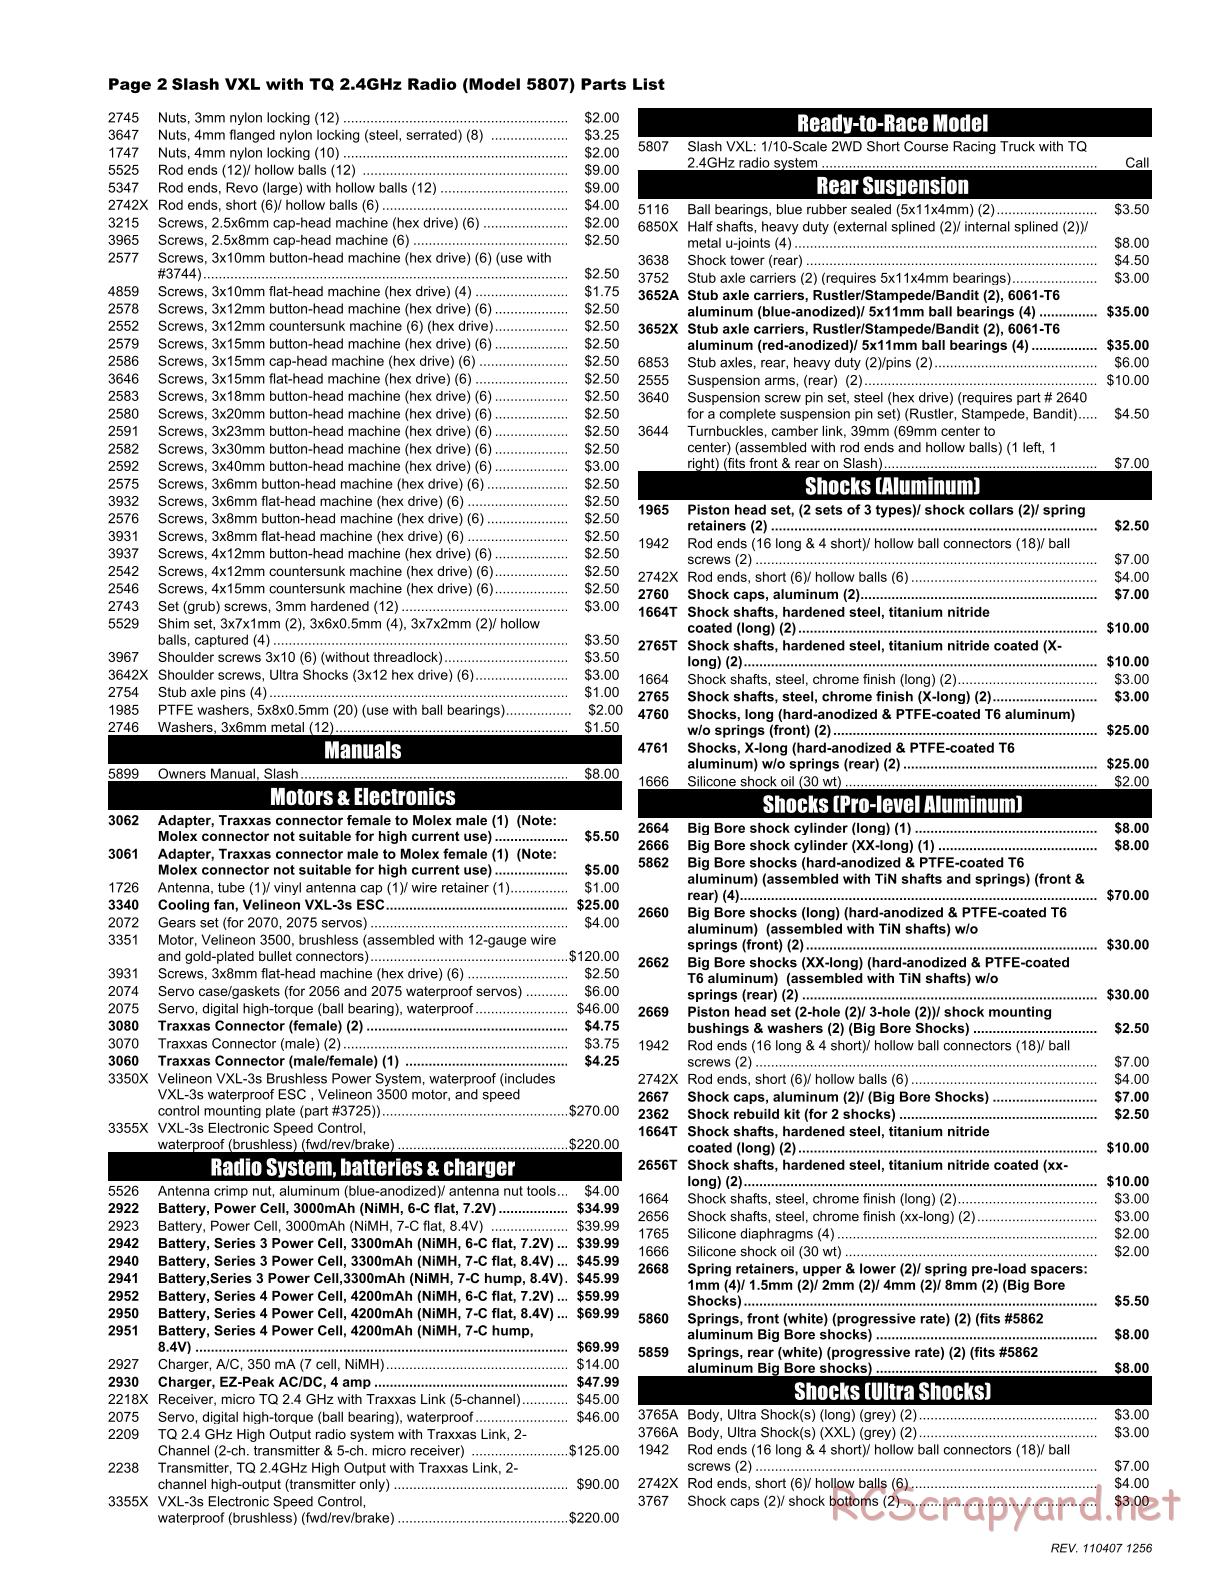 Traxxas - Slash 2WD VXL - Parts List - Page 2